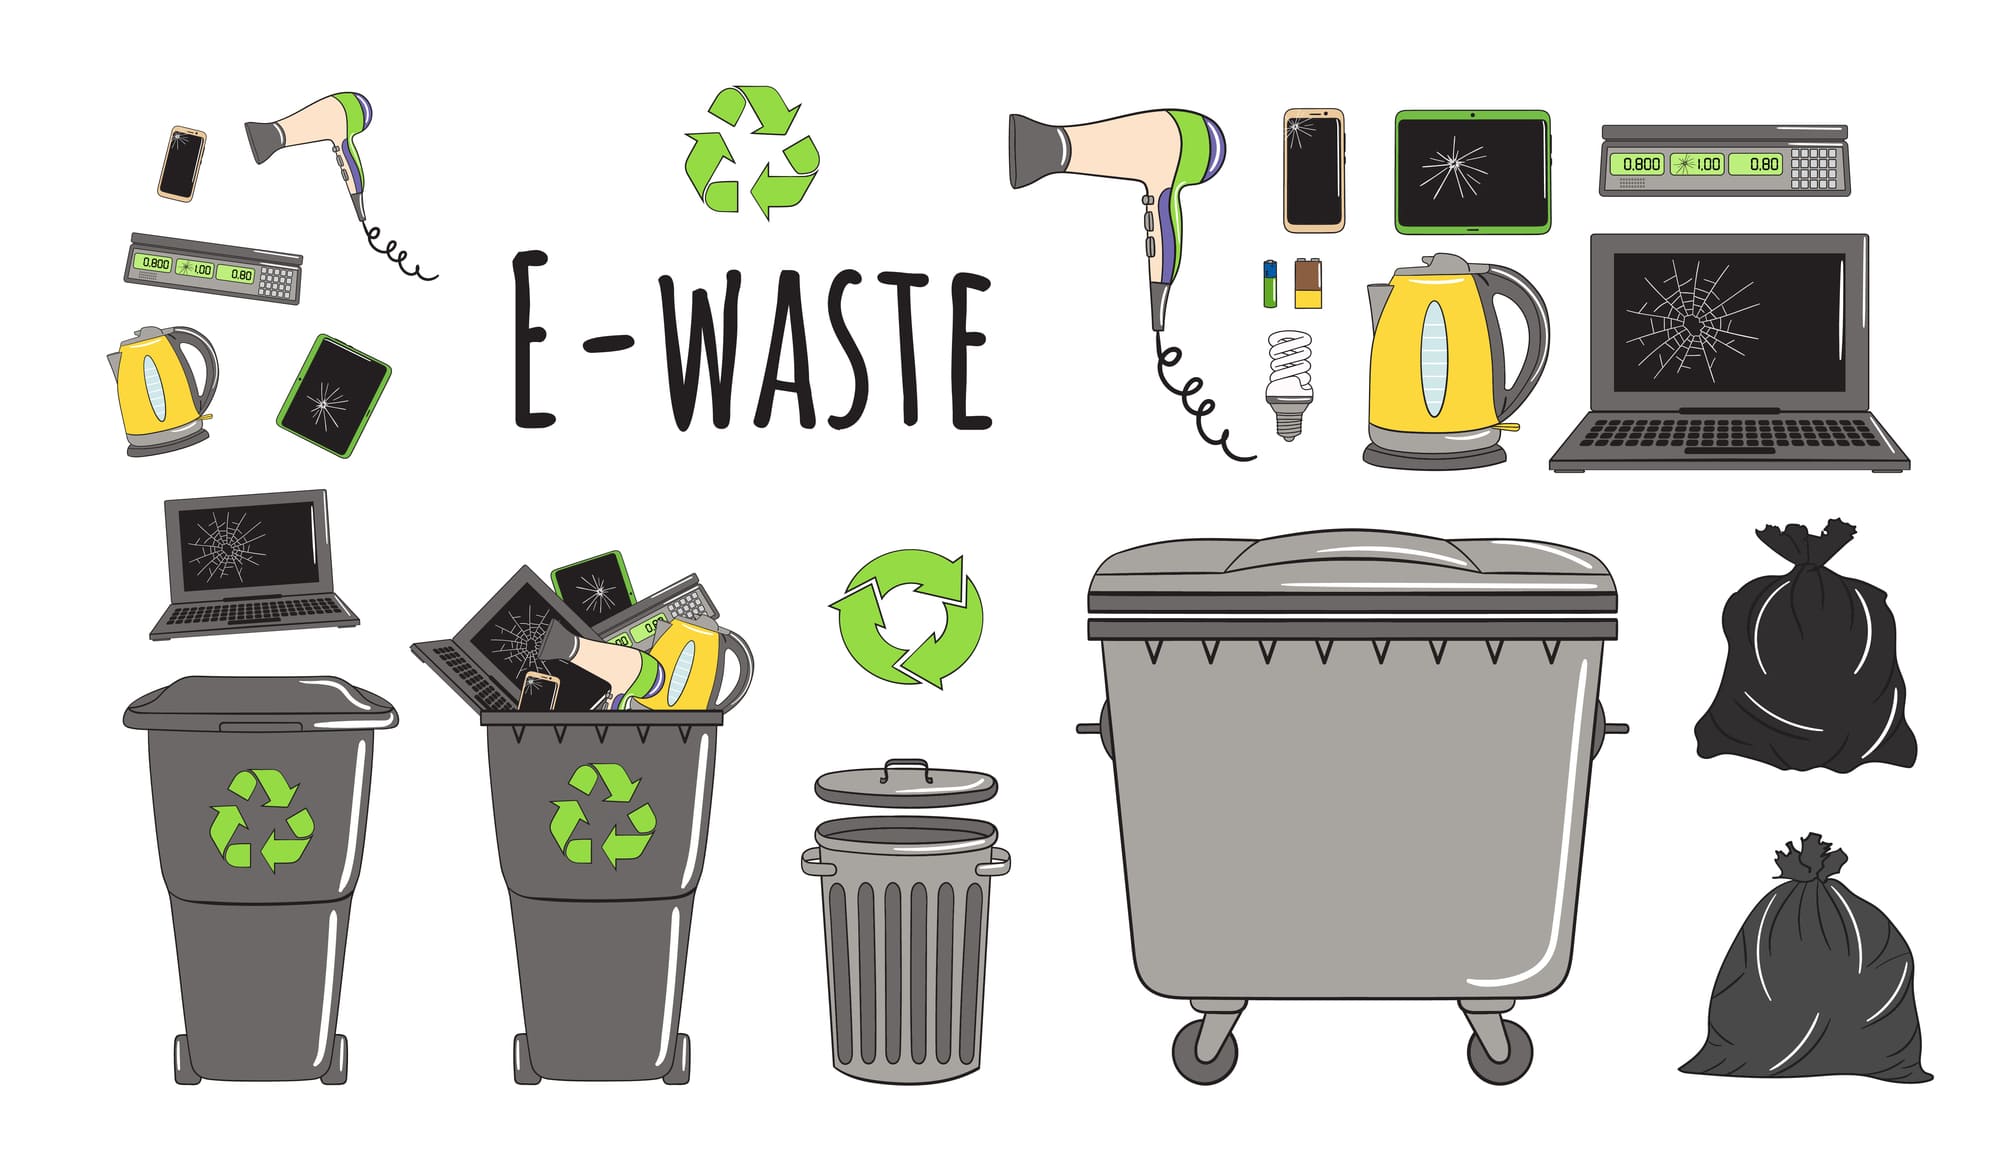 Bahrain Bourse launches e-waste Initiative